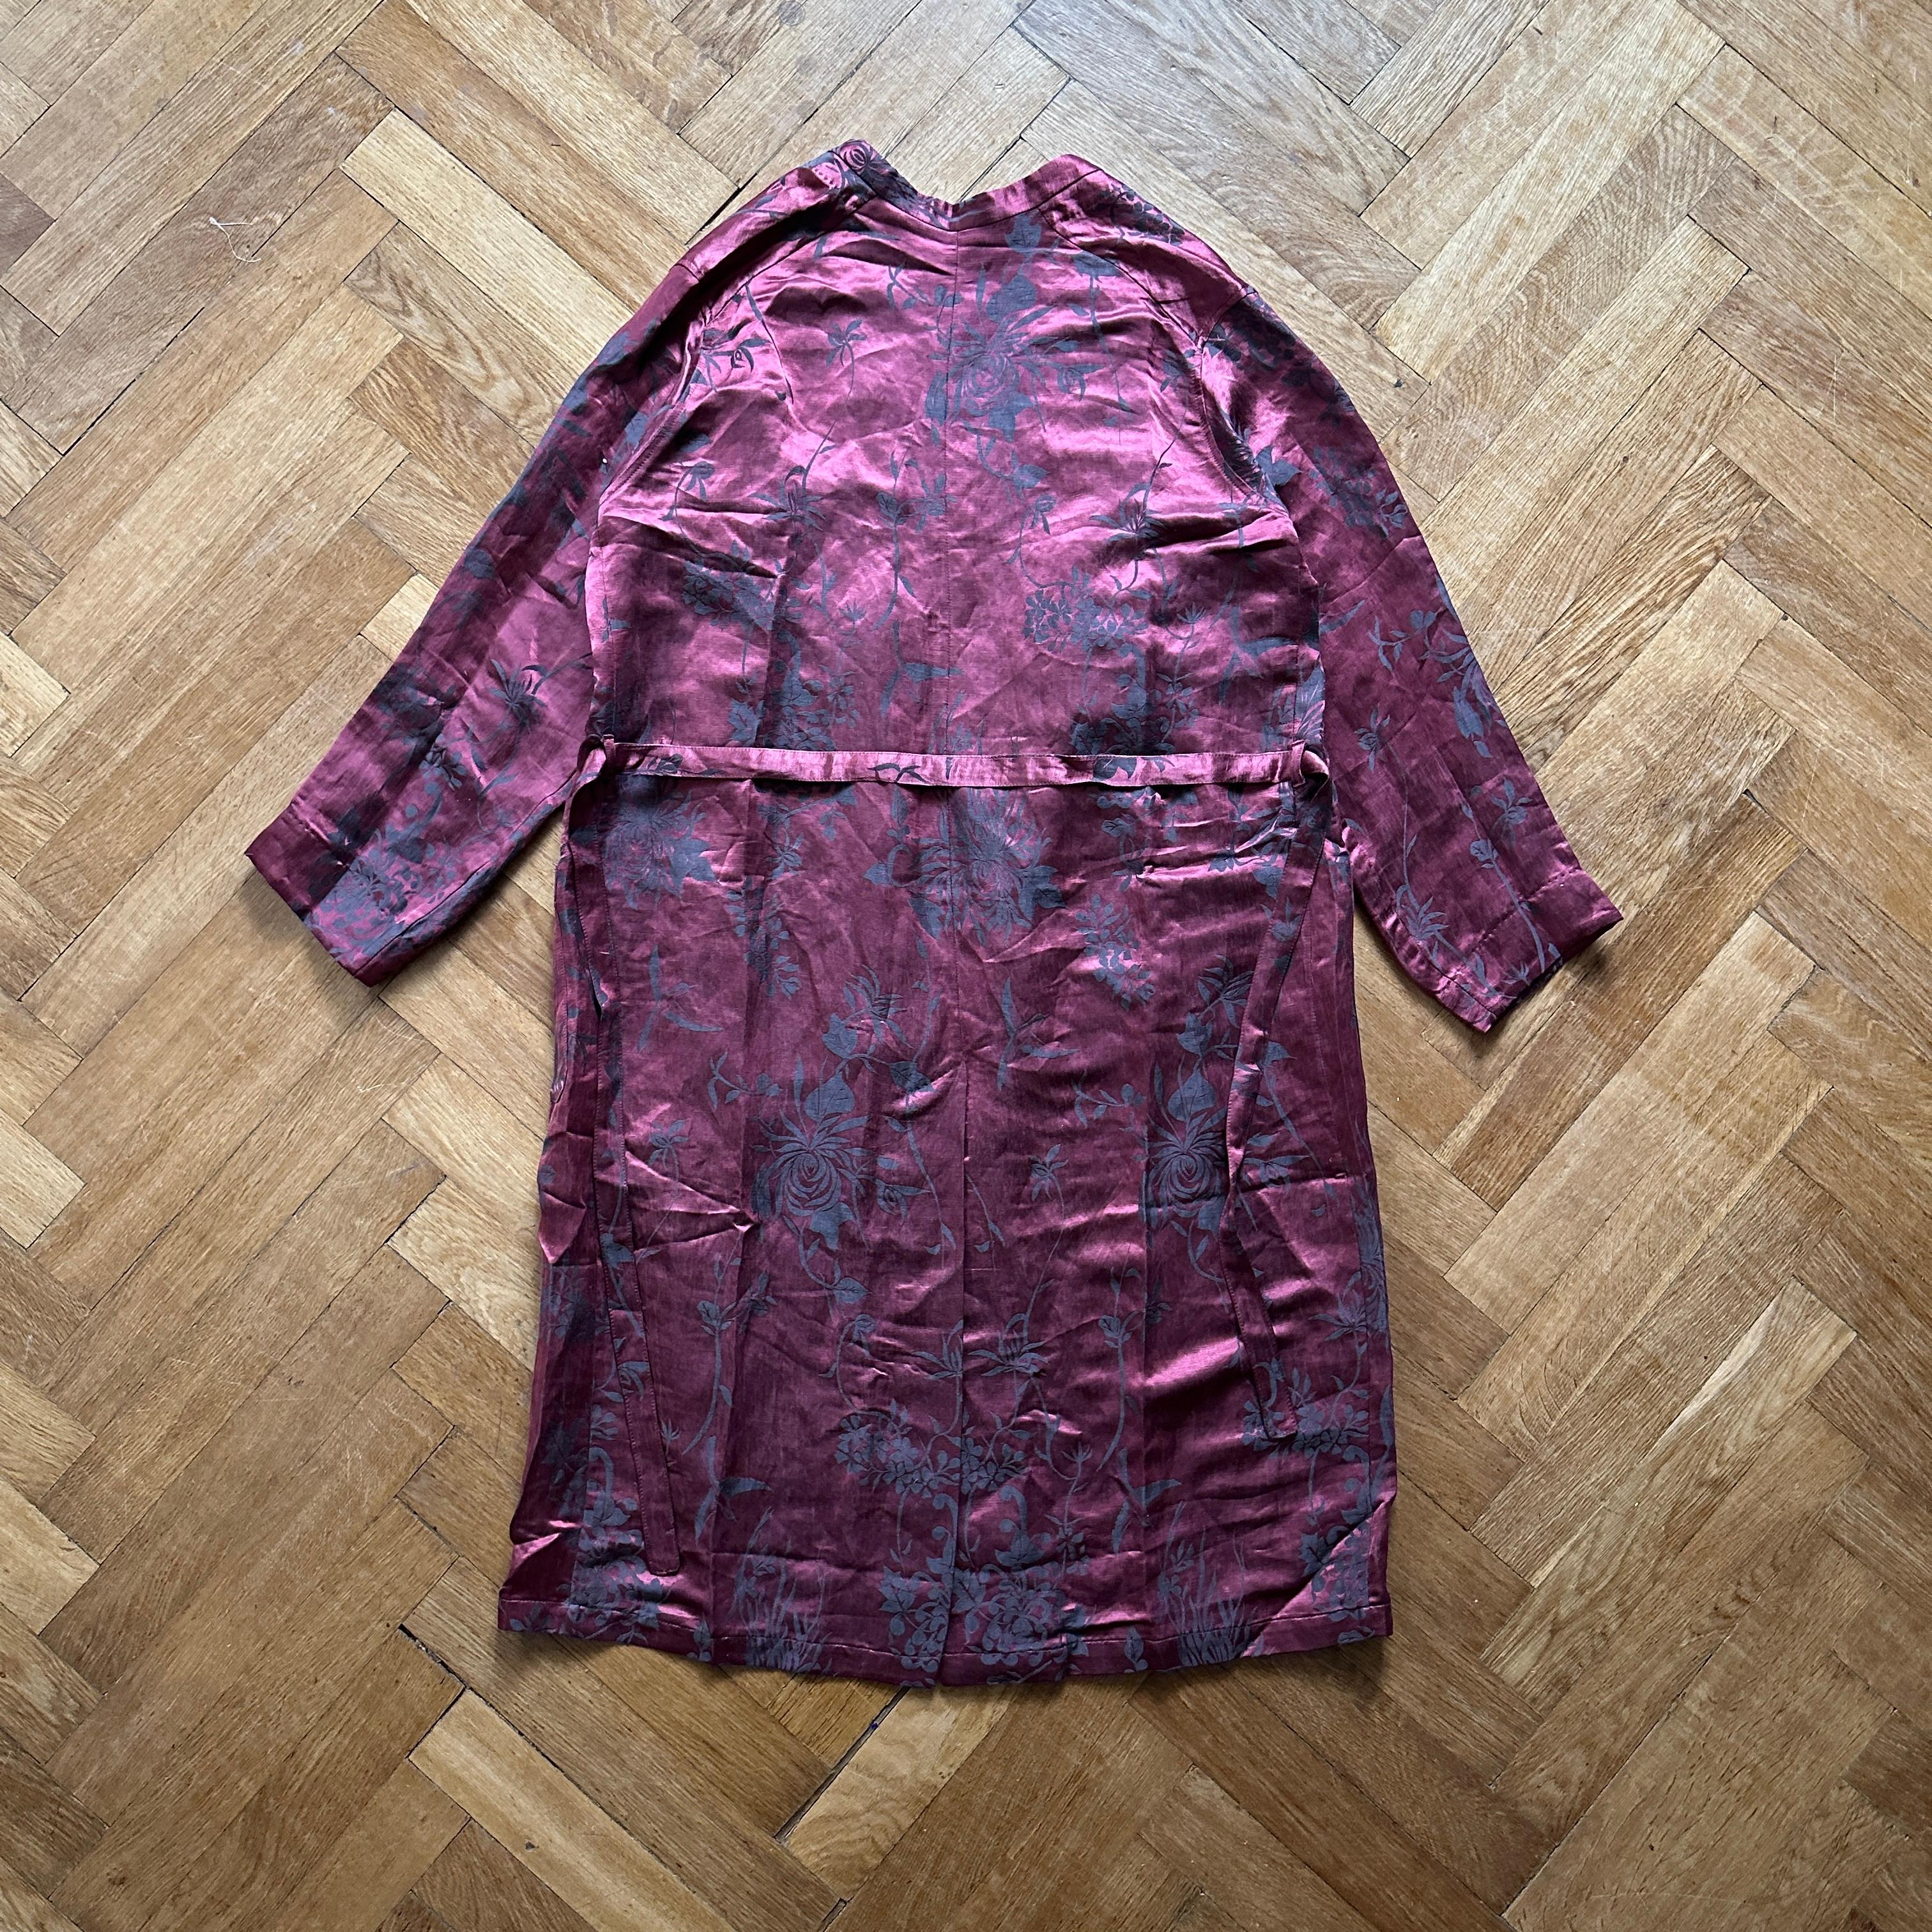 Haider Ackermann SS15 Oversized Floral Kimono Coat For Sale 6